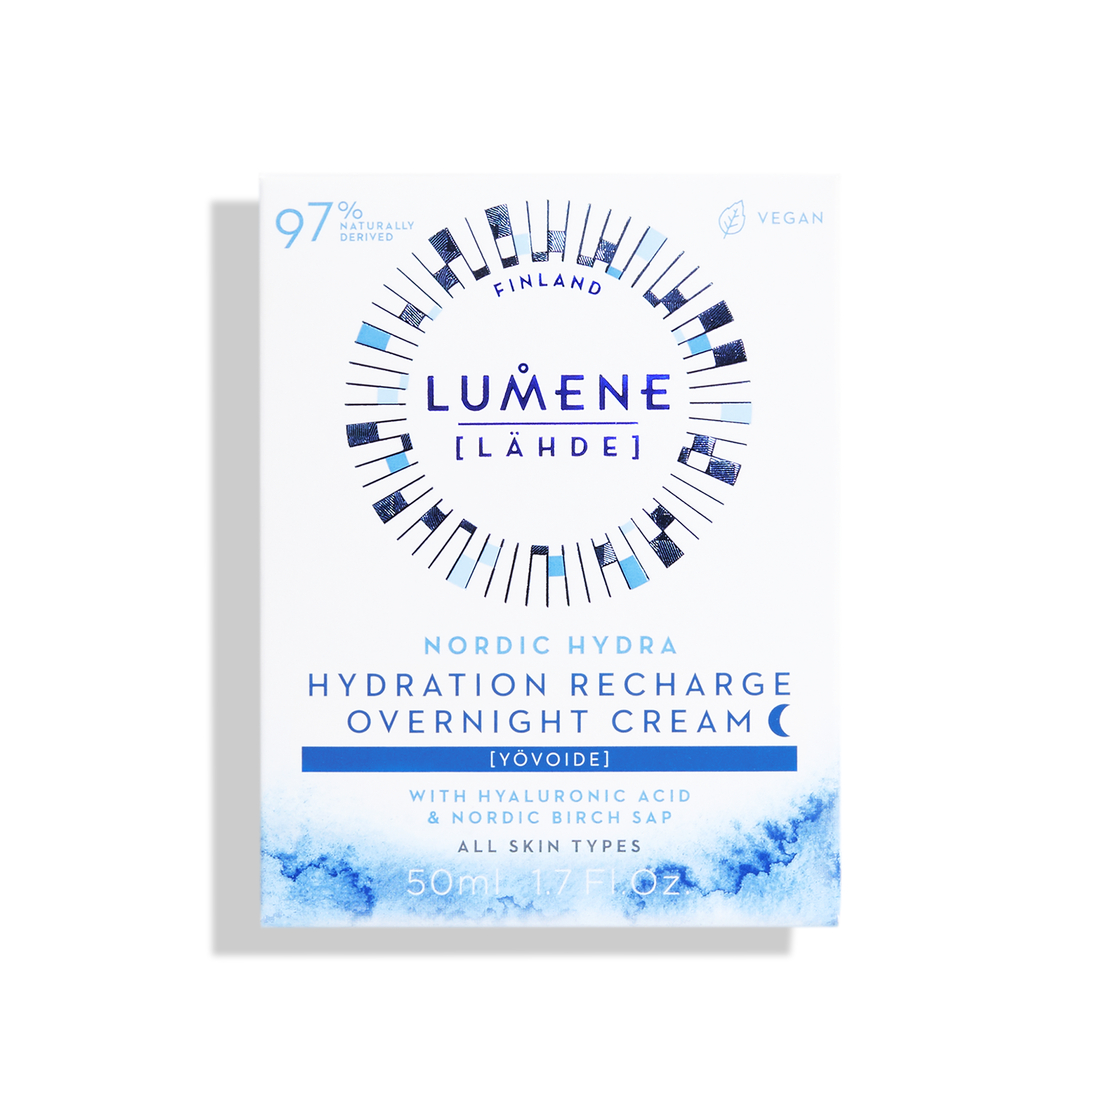 Hydration Recharge Overnight Cream